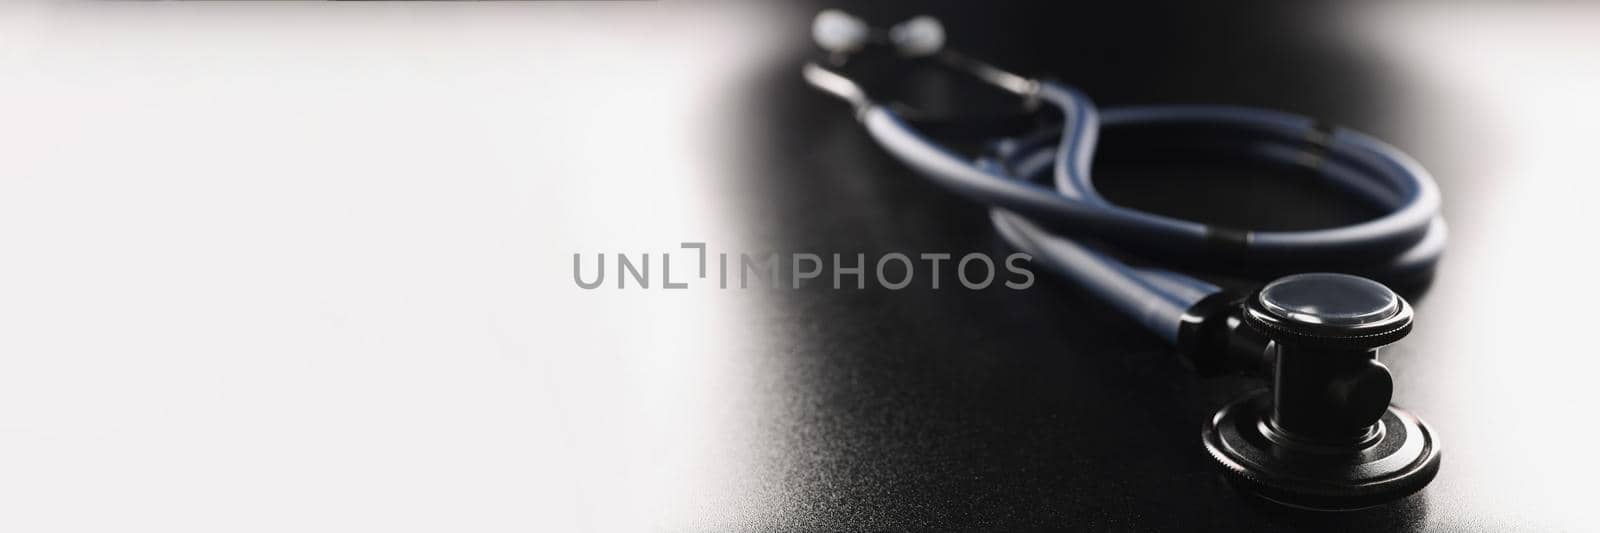 Dark blue stethoscope lying on black background closeup by kuprevich